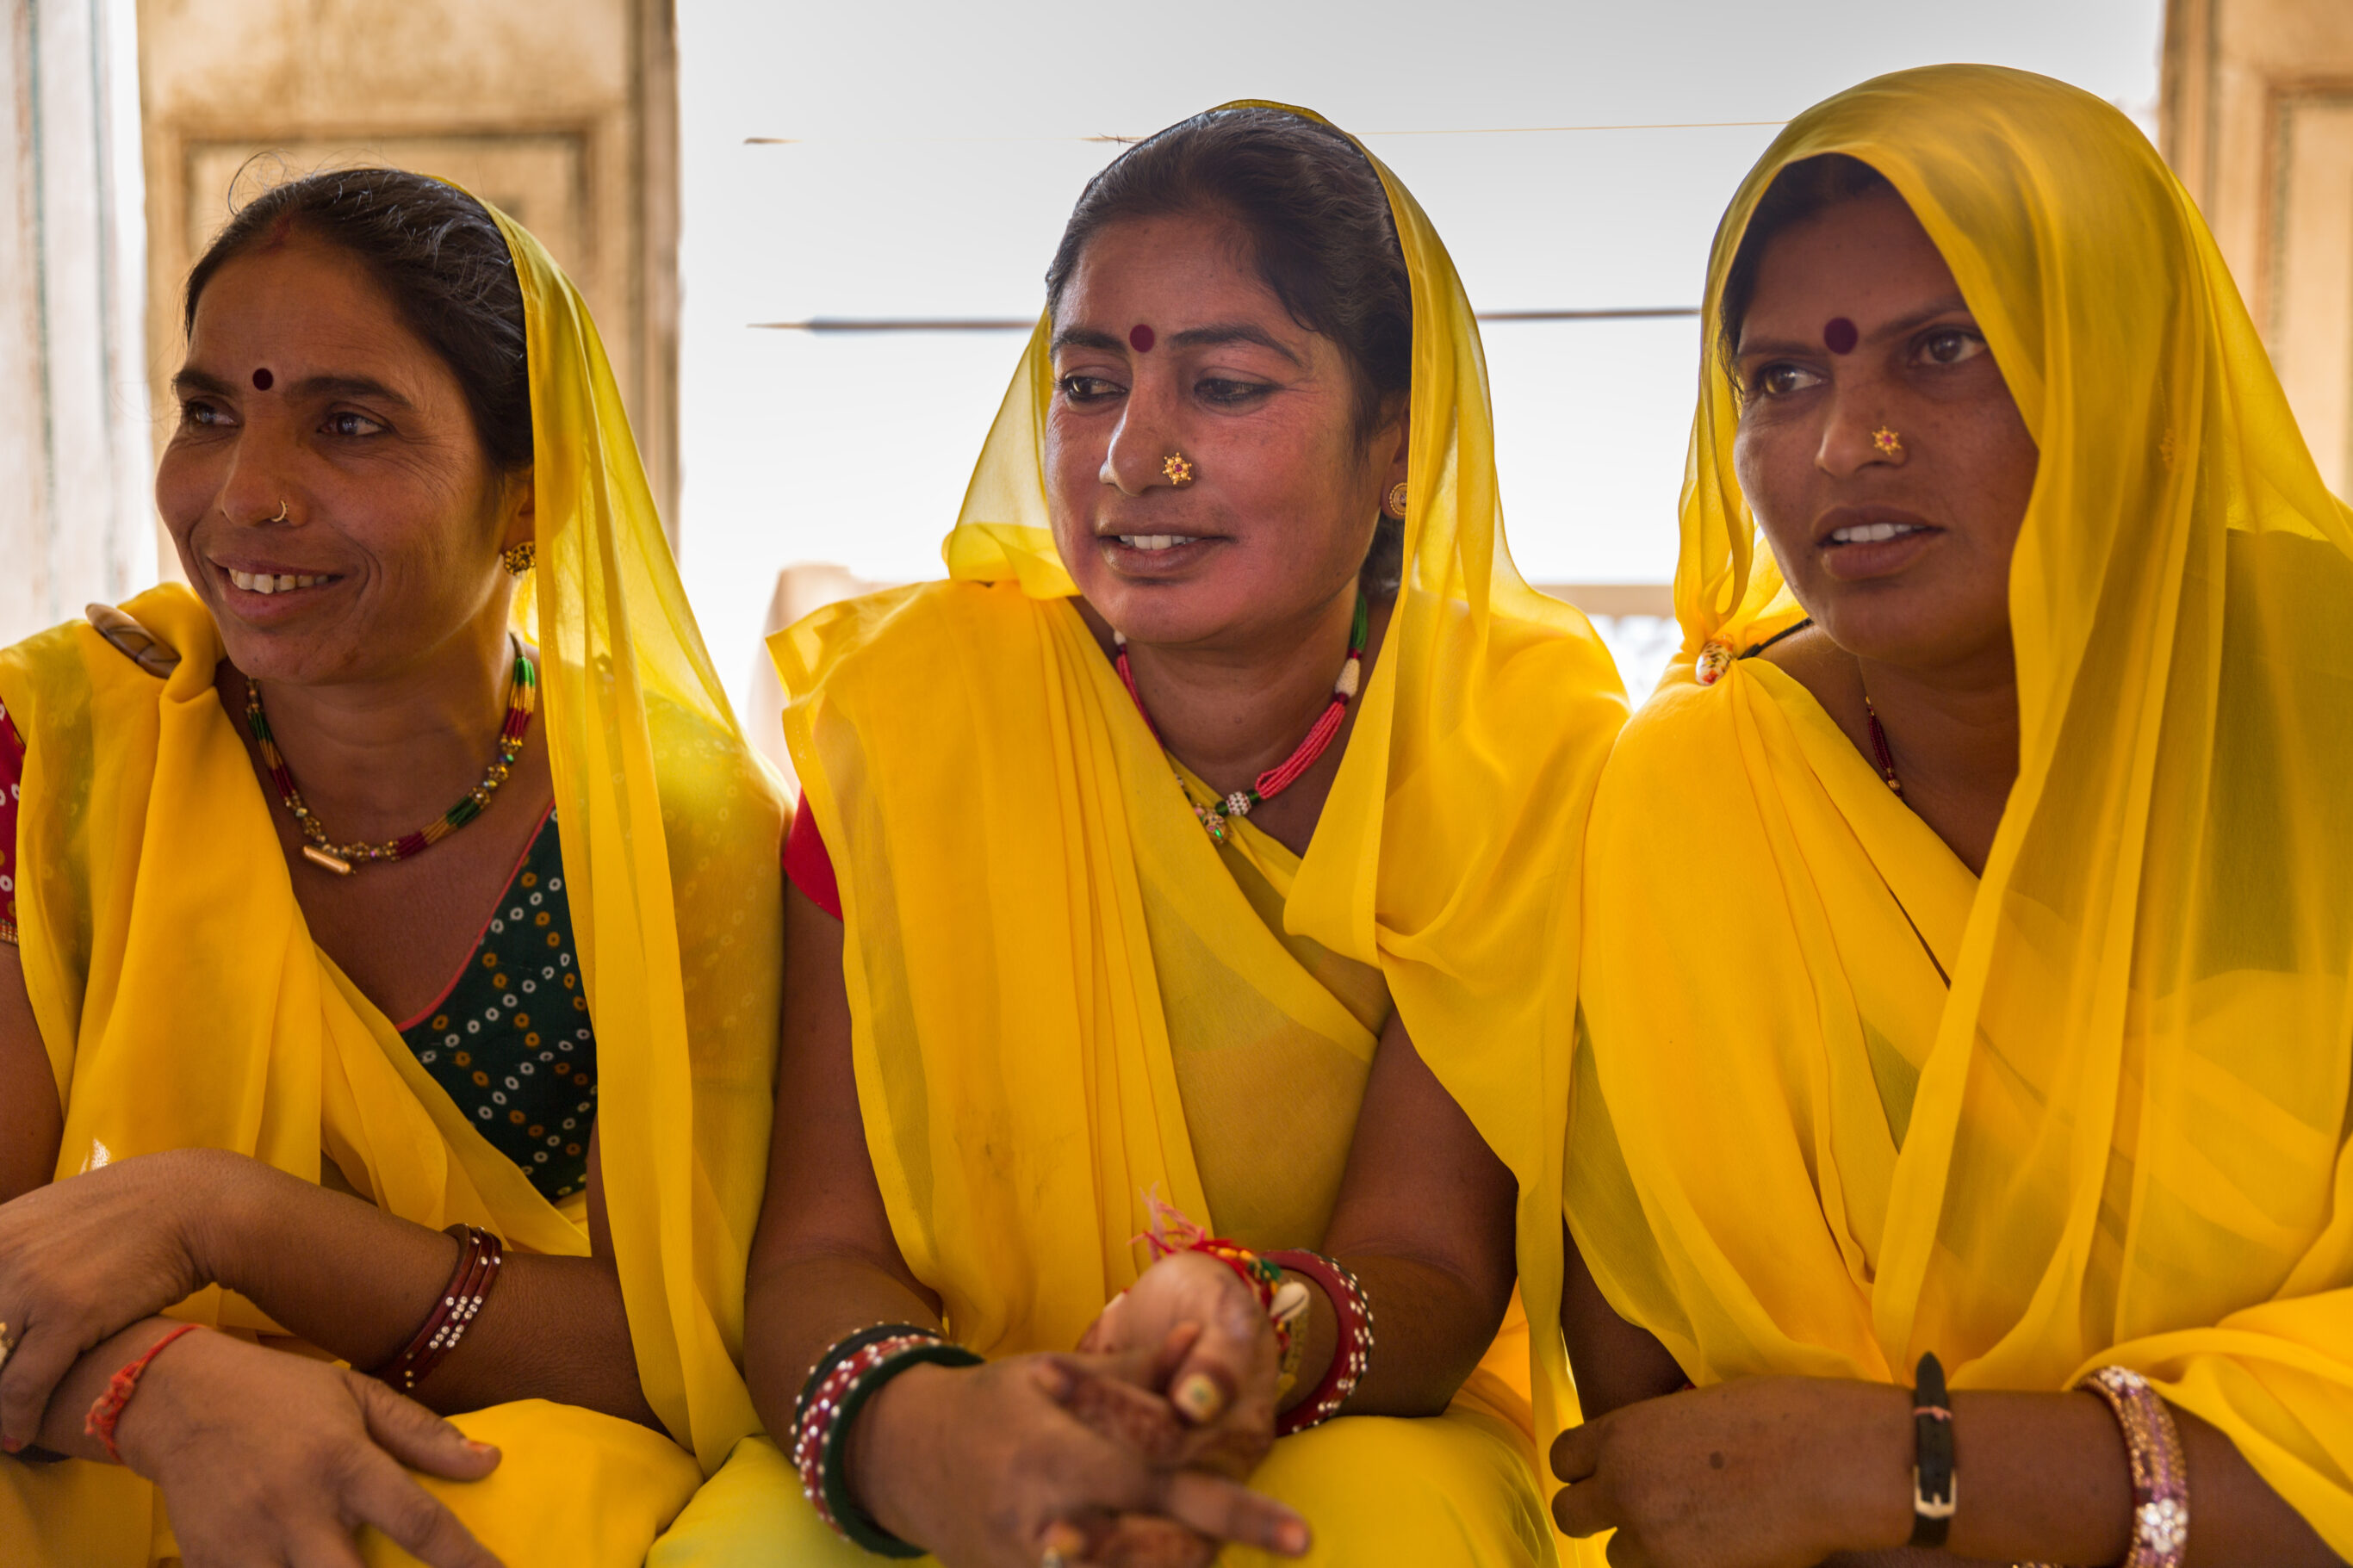 Traditional Indian Women in sari Costume